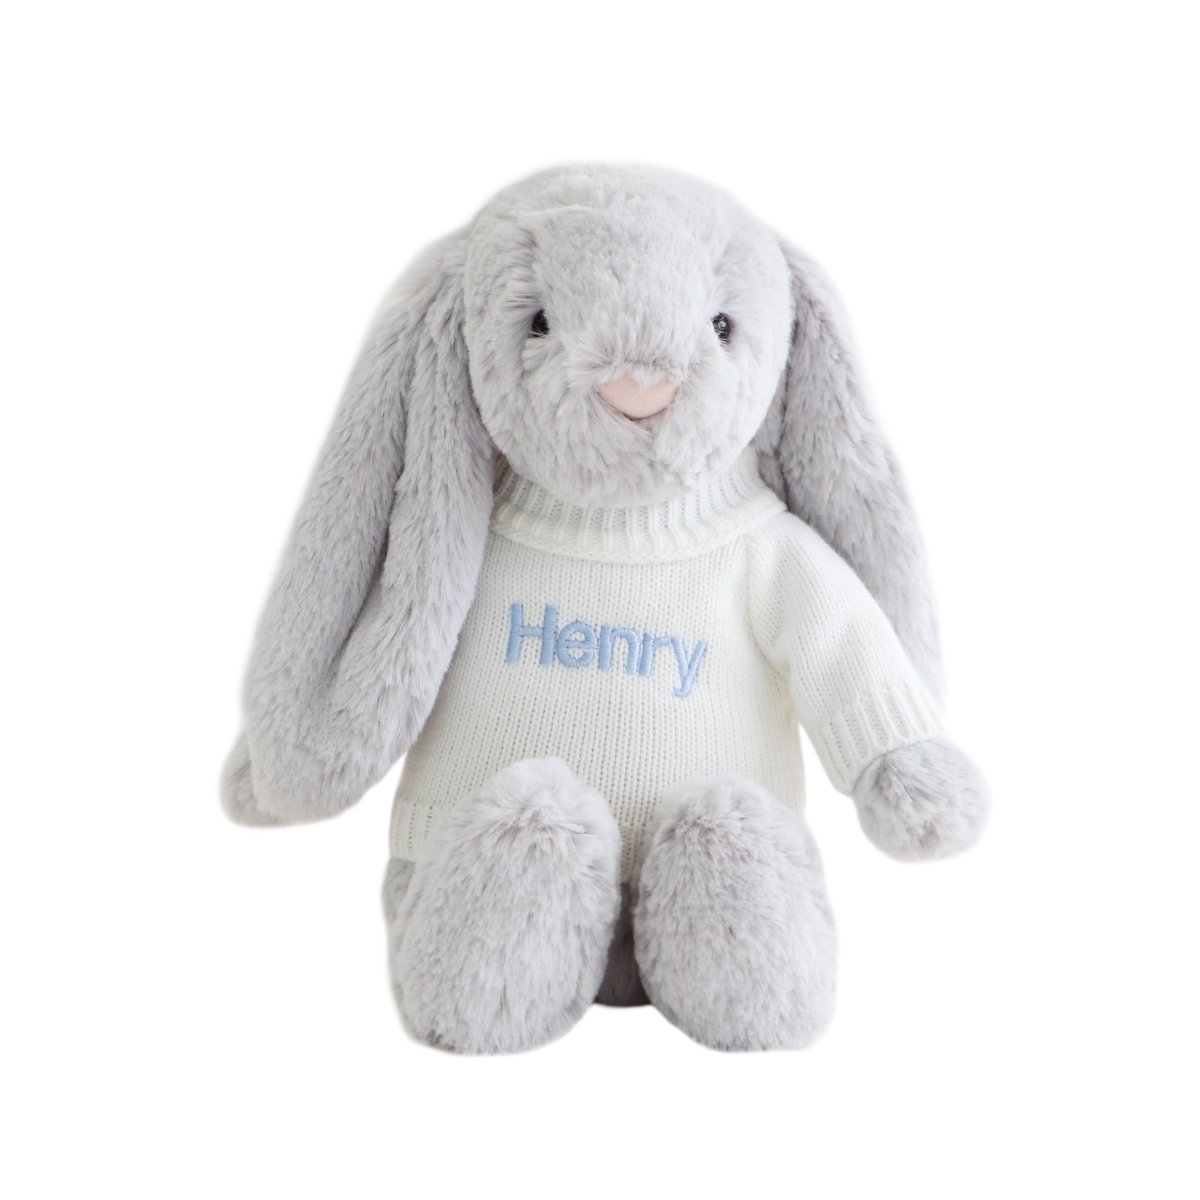 Personalised Jellycat Bunny - Grey - LOVINGLY SIGNED (HK)